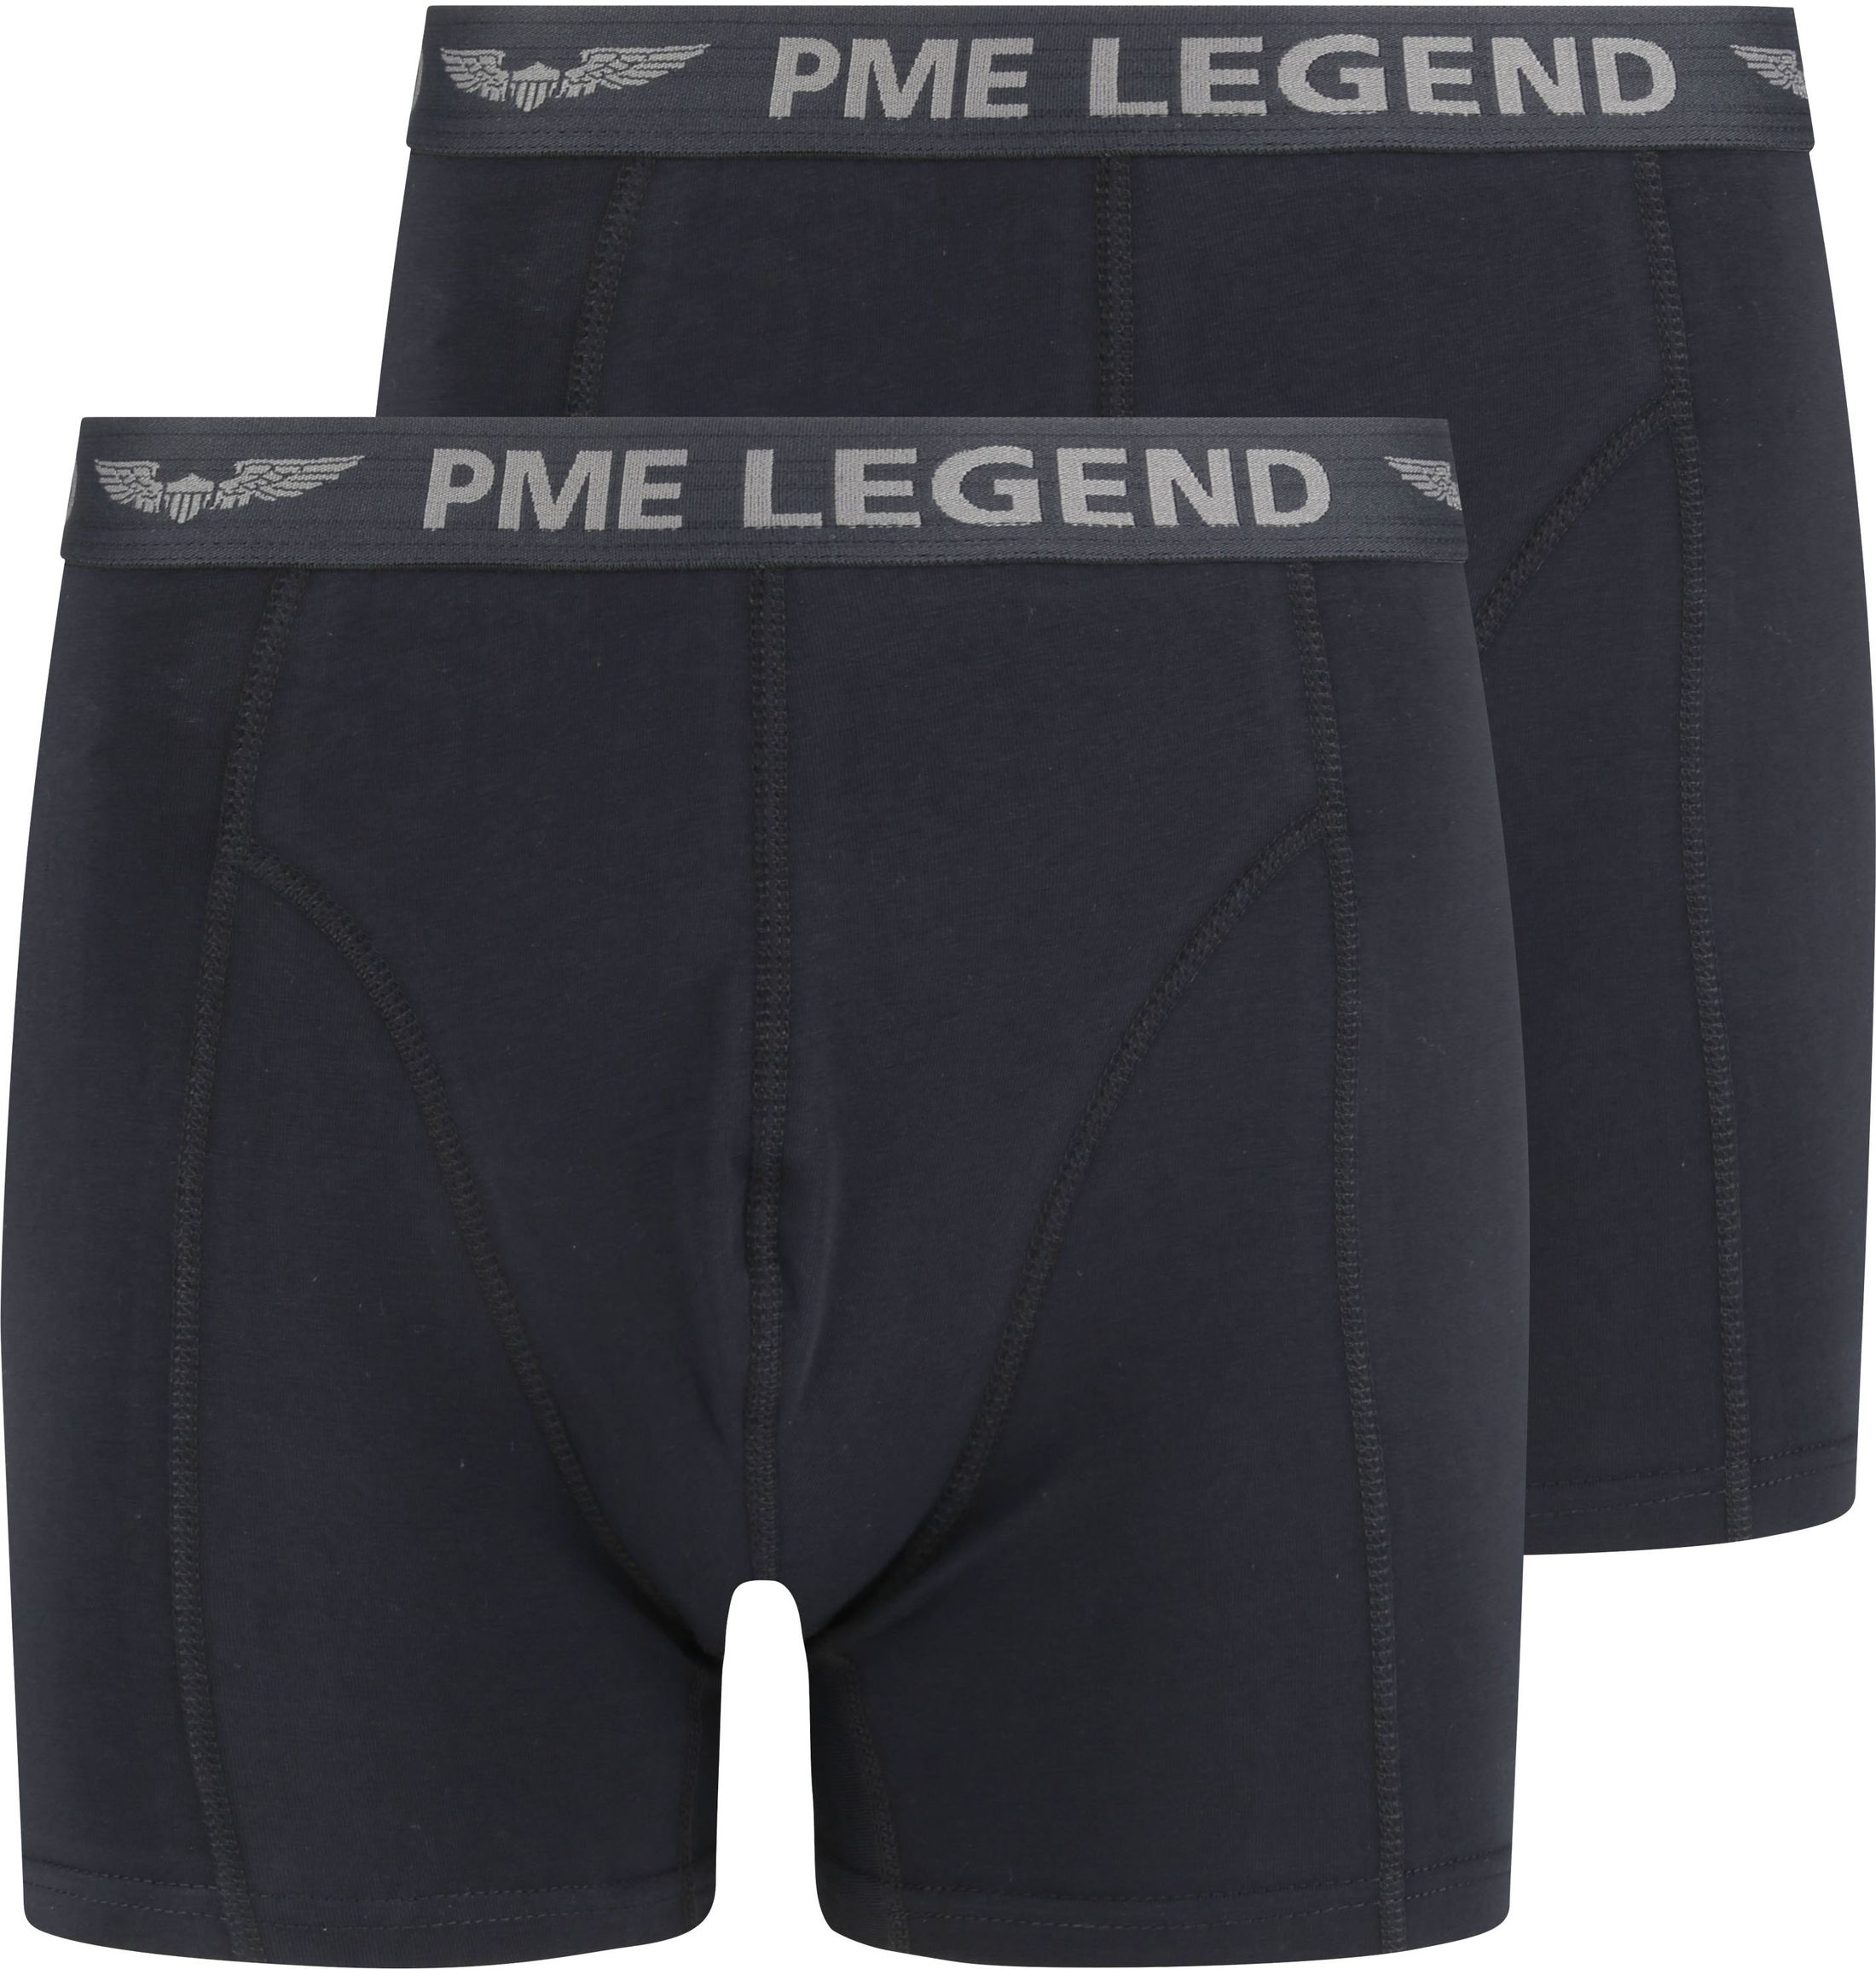 PME Legend Boxershorts 2-Pack Uni Black size 3XL